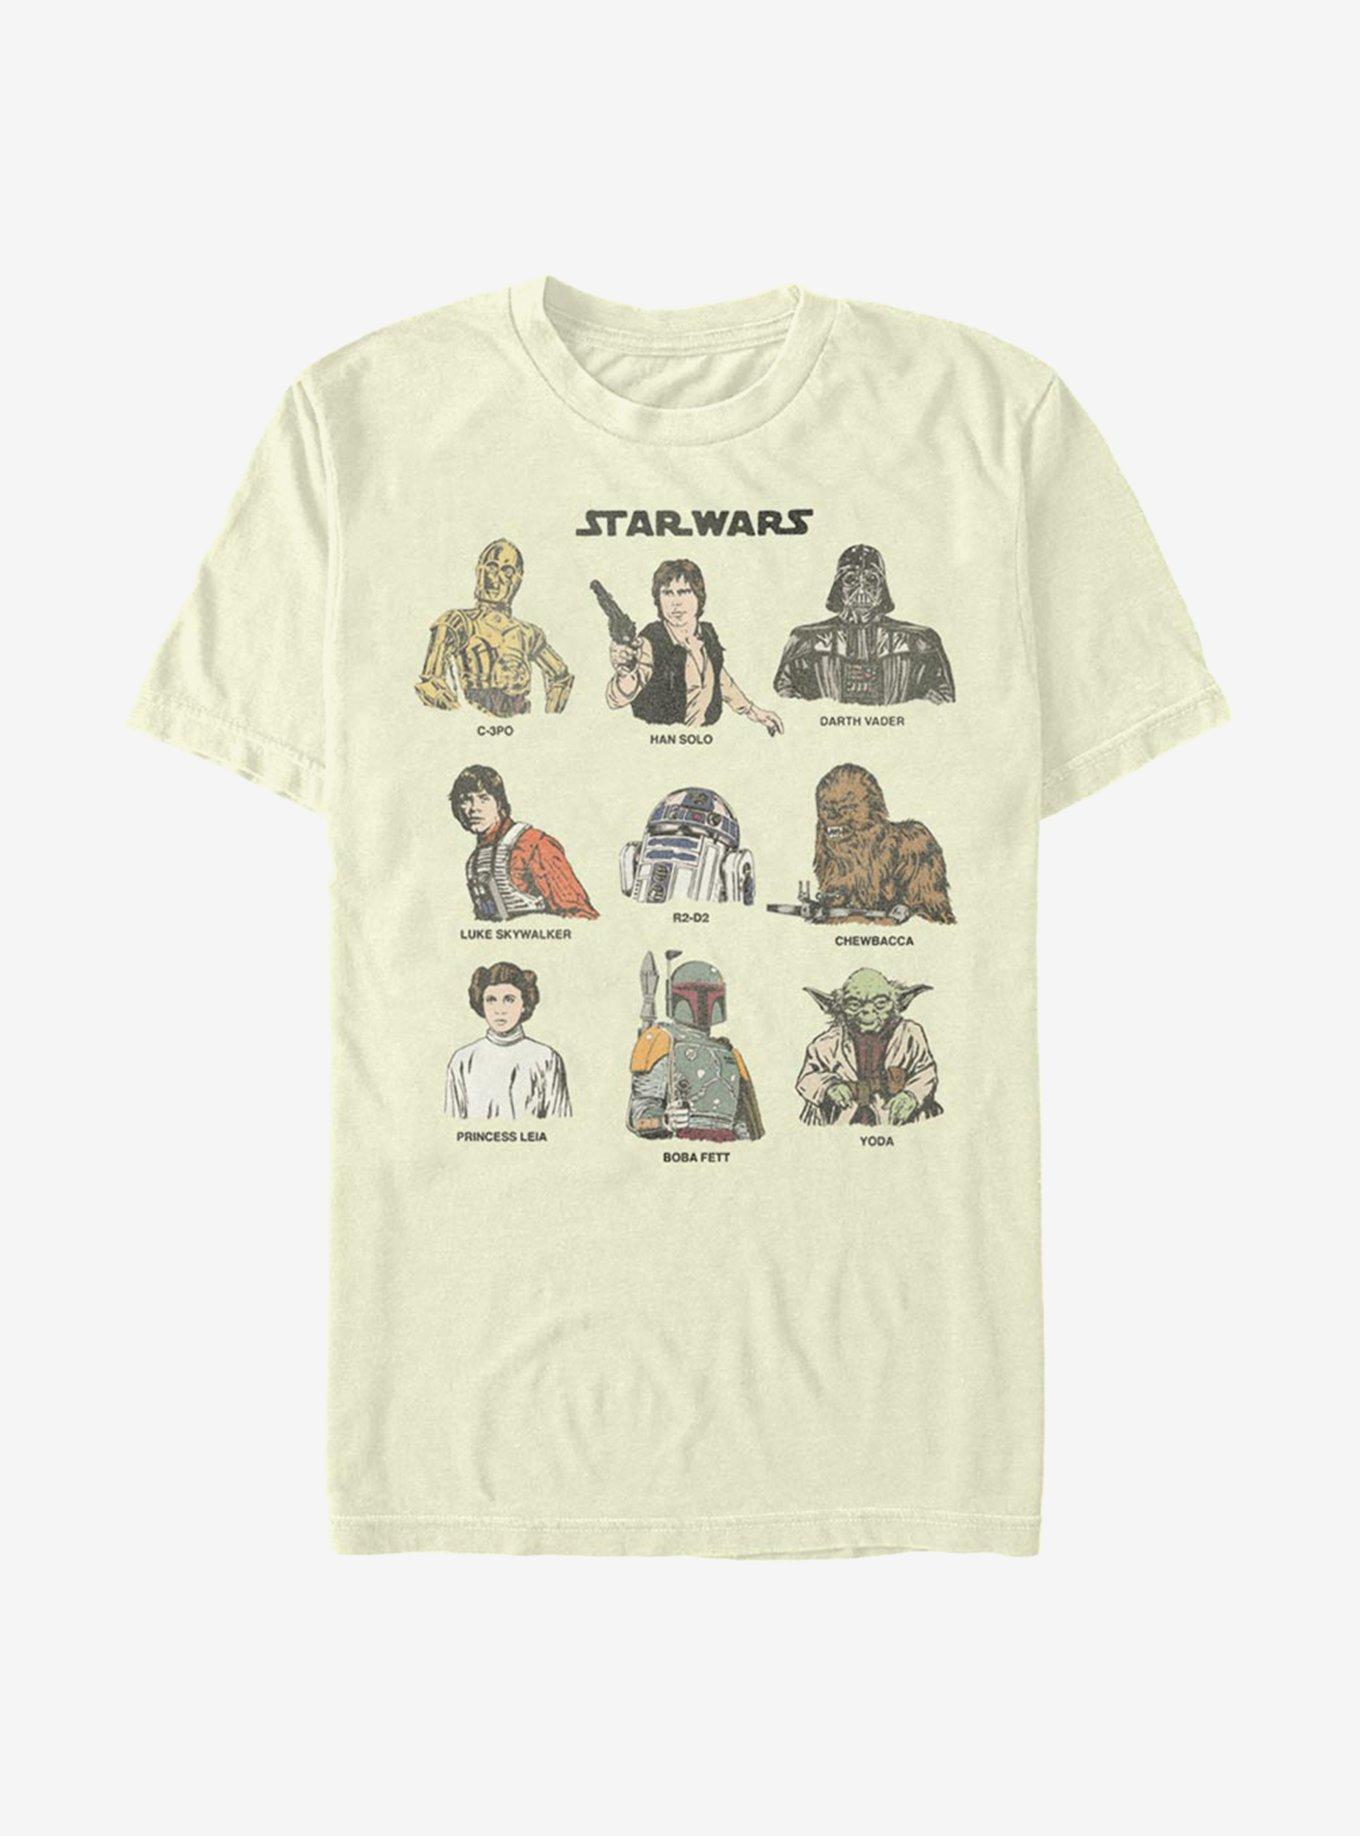 Star Wars Retro Character Cast T-Shirt